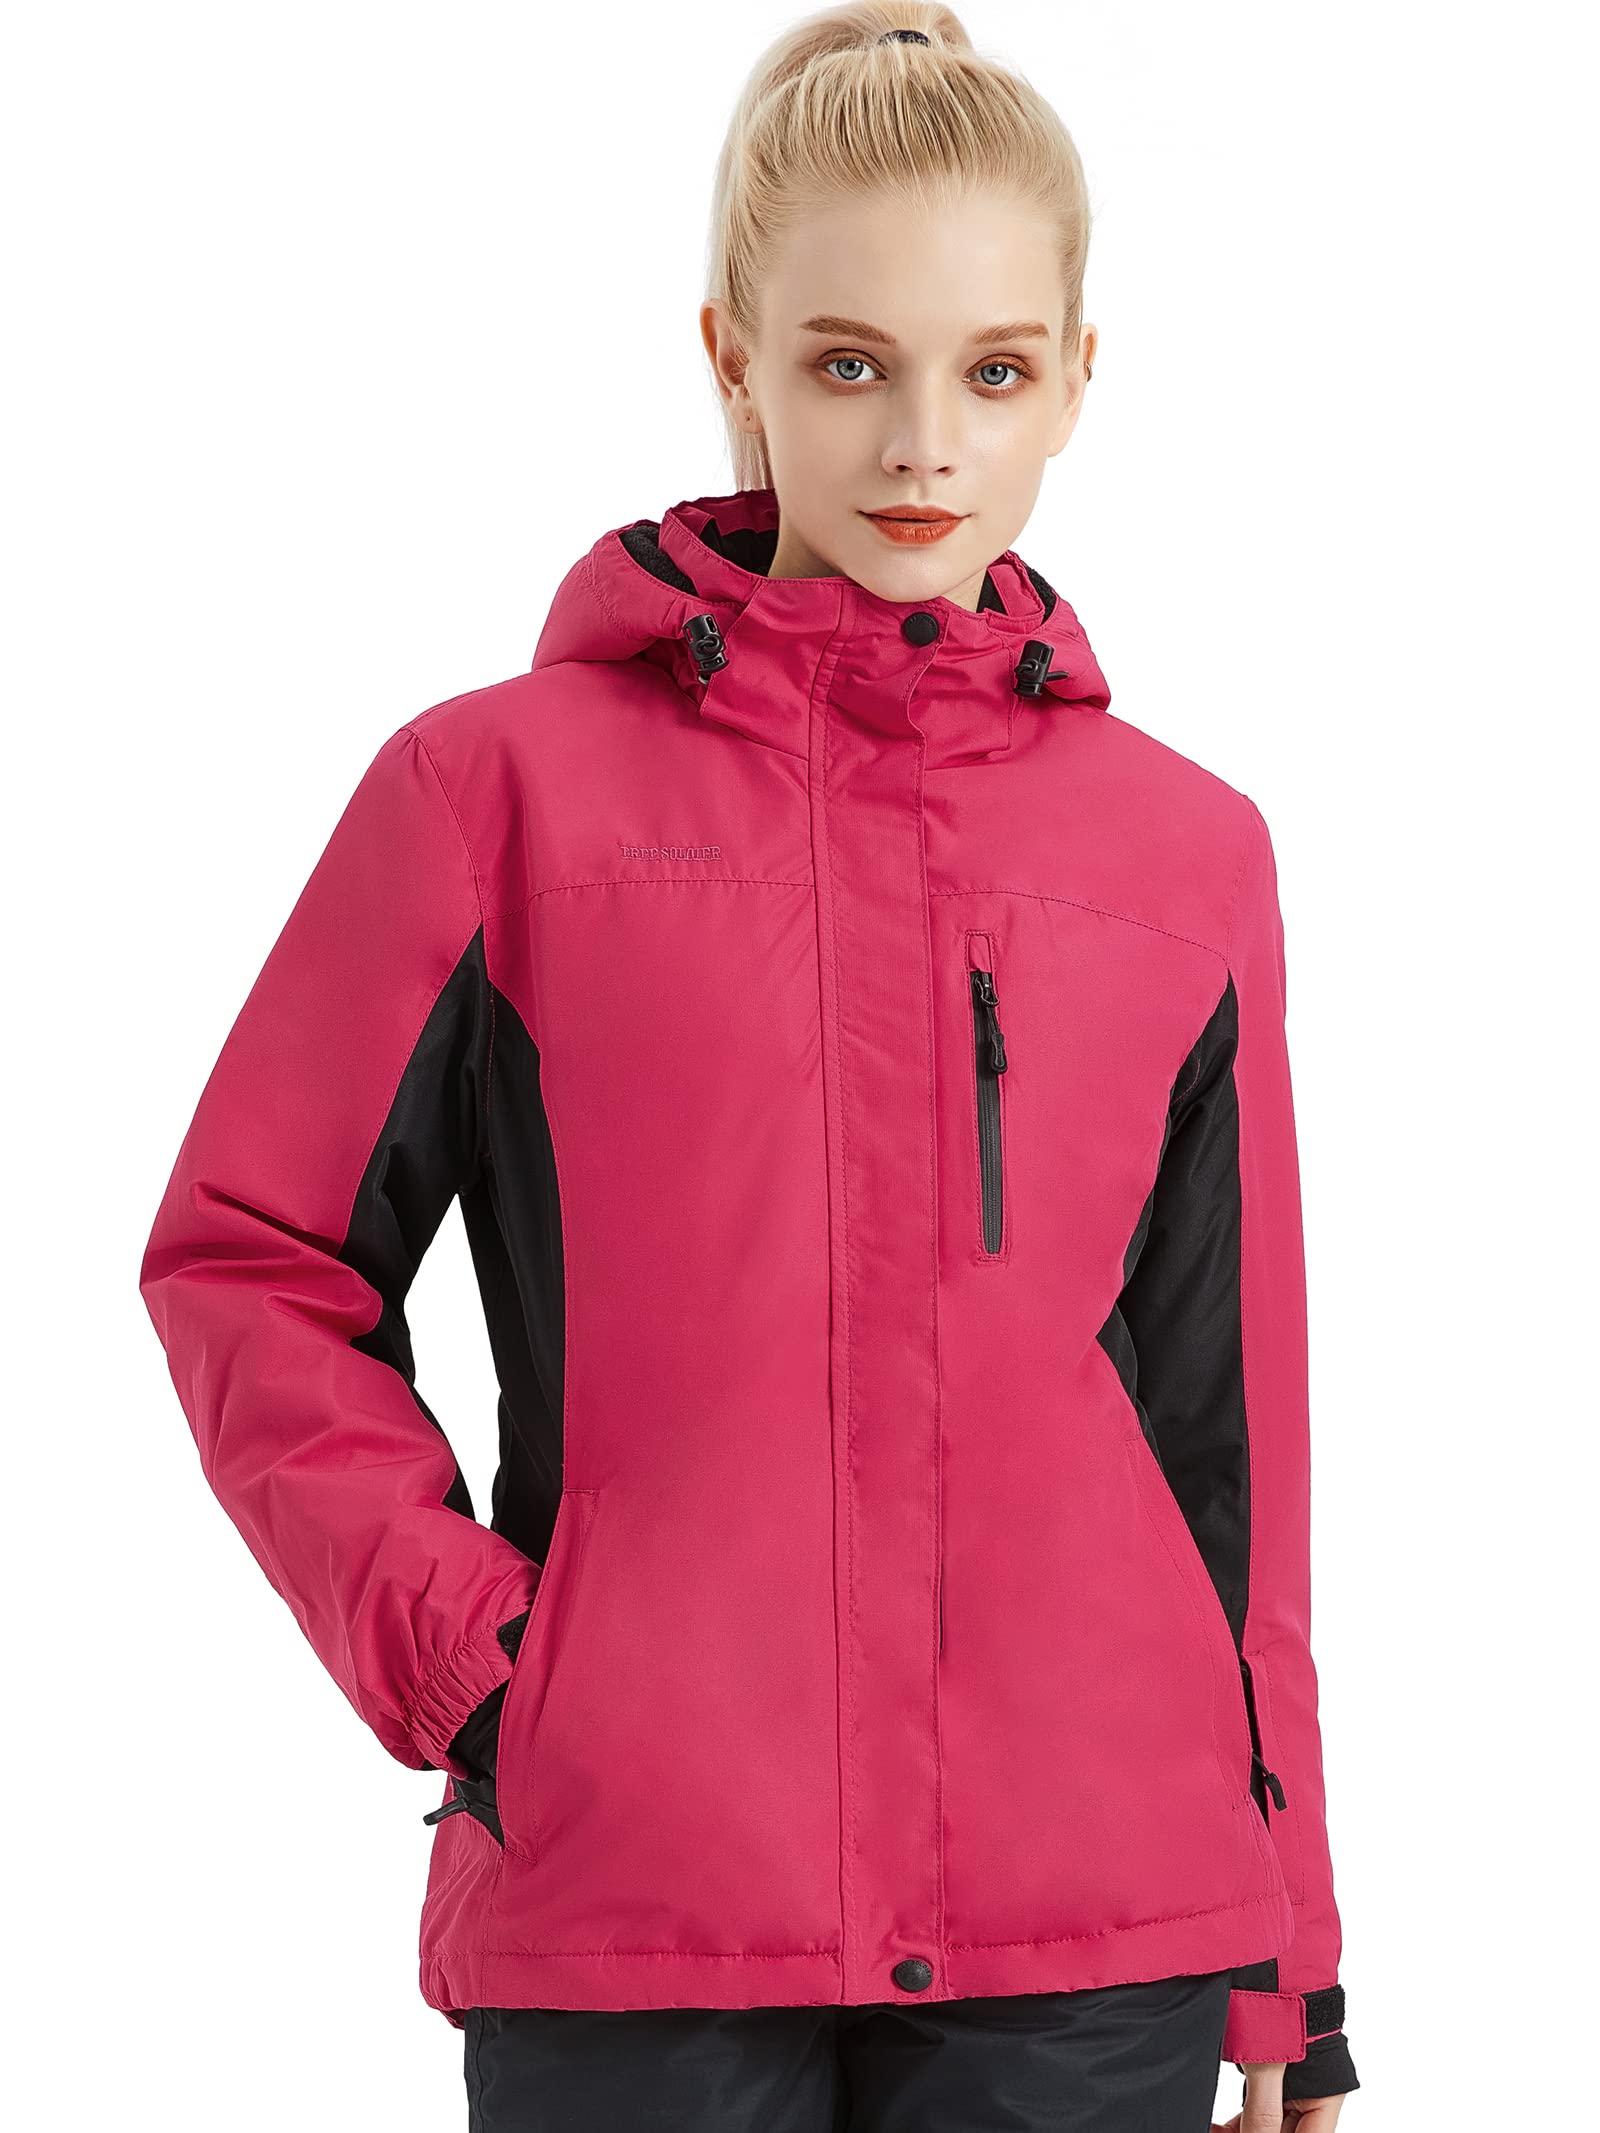 FREE SOLDIER Womens Waterproof Ski Snow Jacket Fleece Lined Warm Winter Rain Jacket with Hood Fully Taped Seams(Rose Red,2XL)